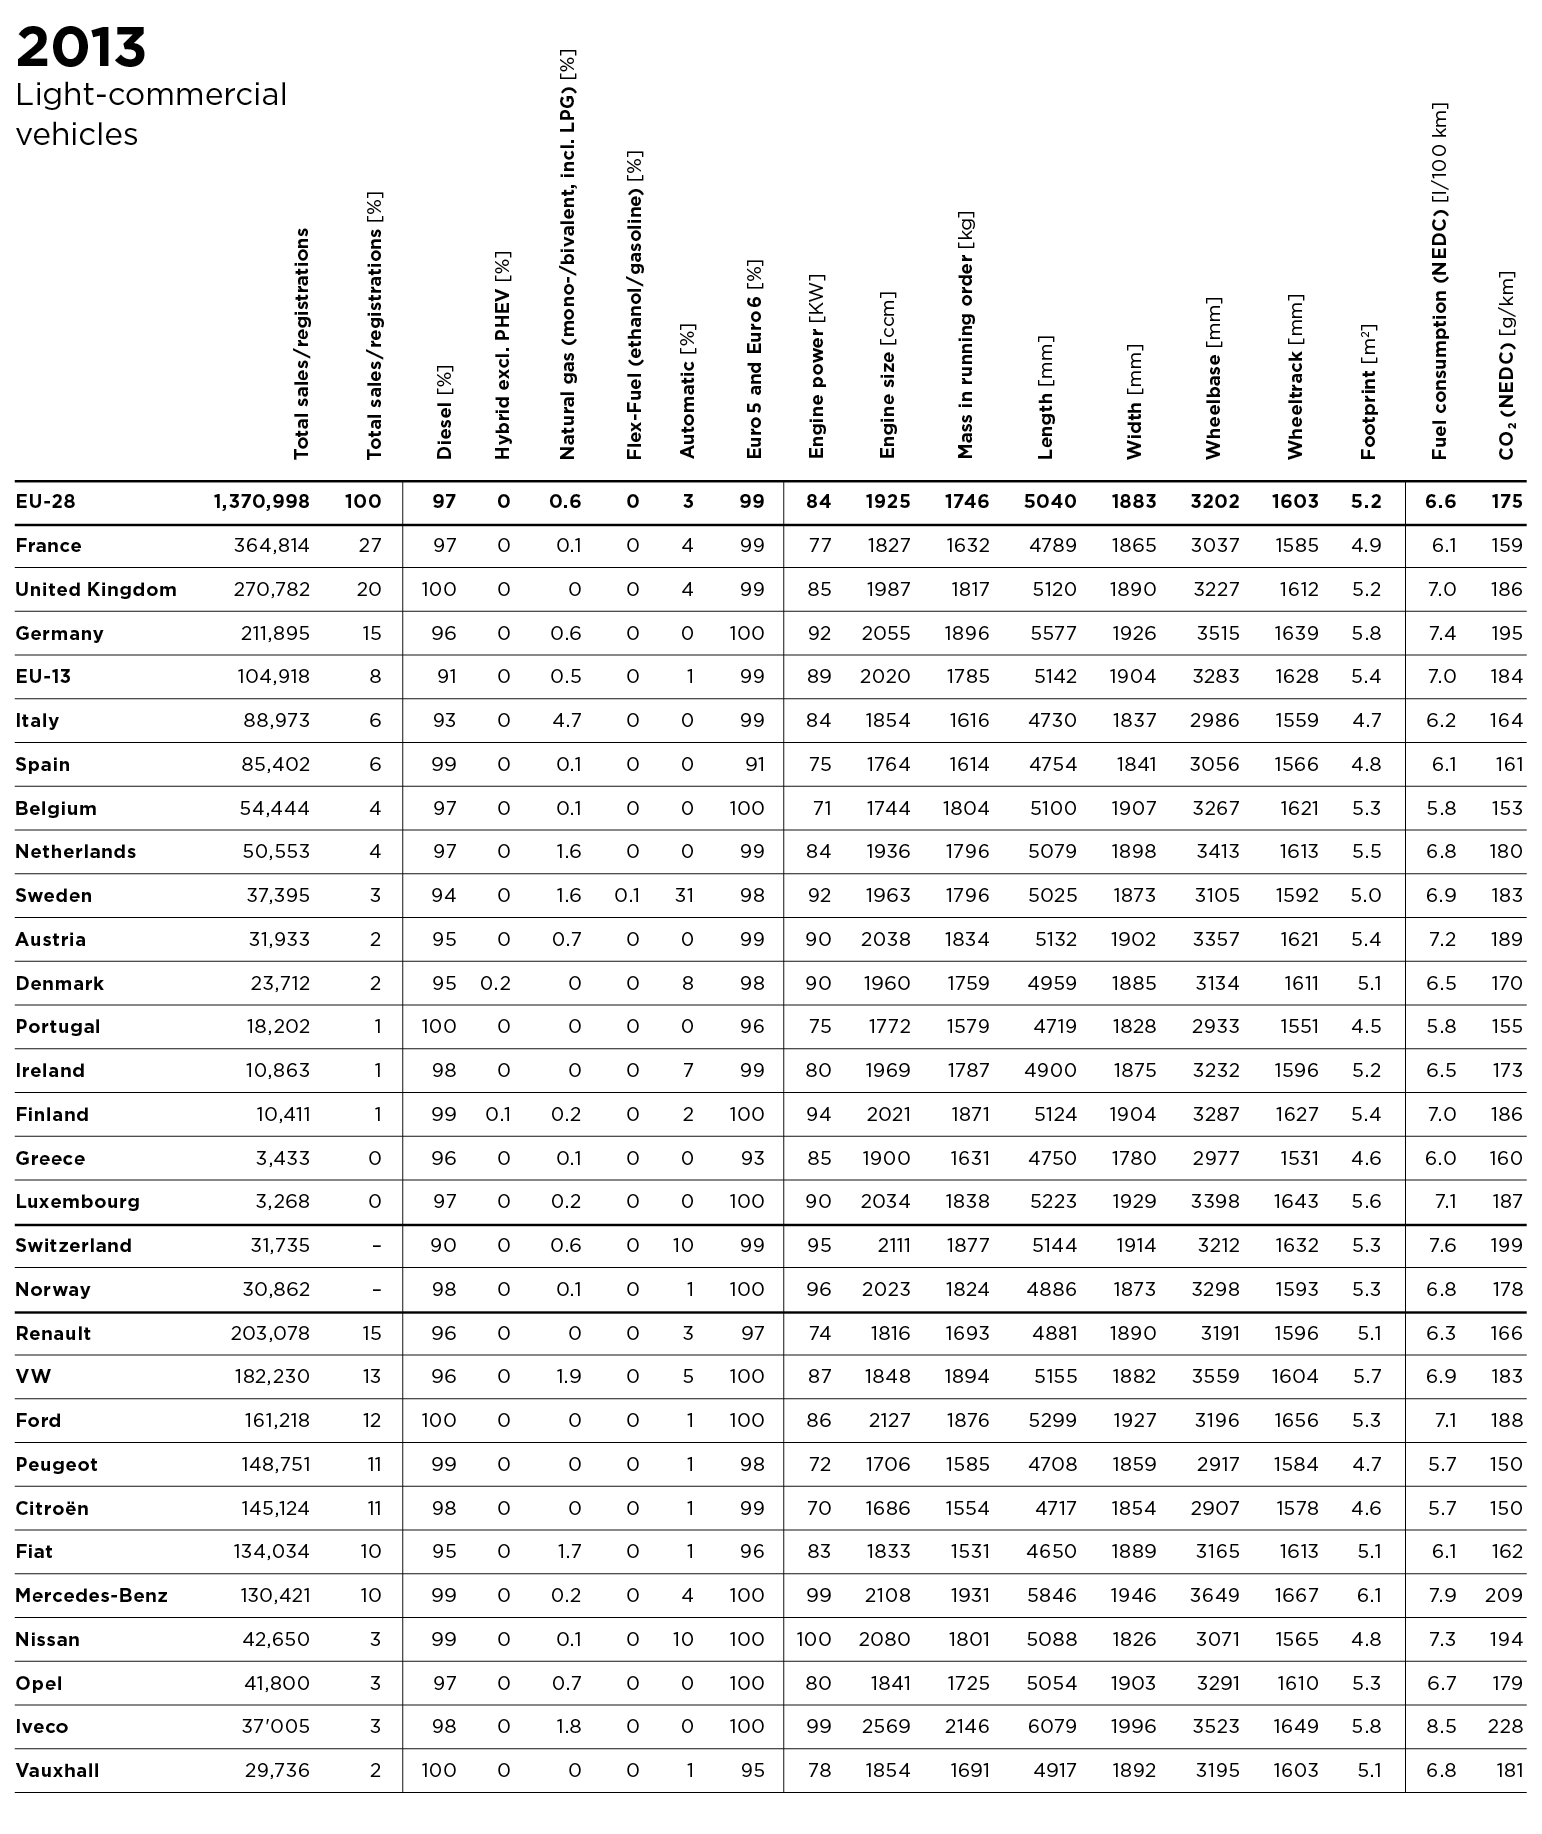 LCV 2013 data